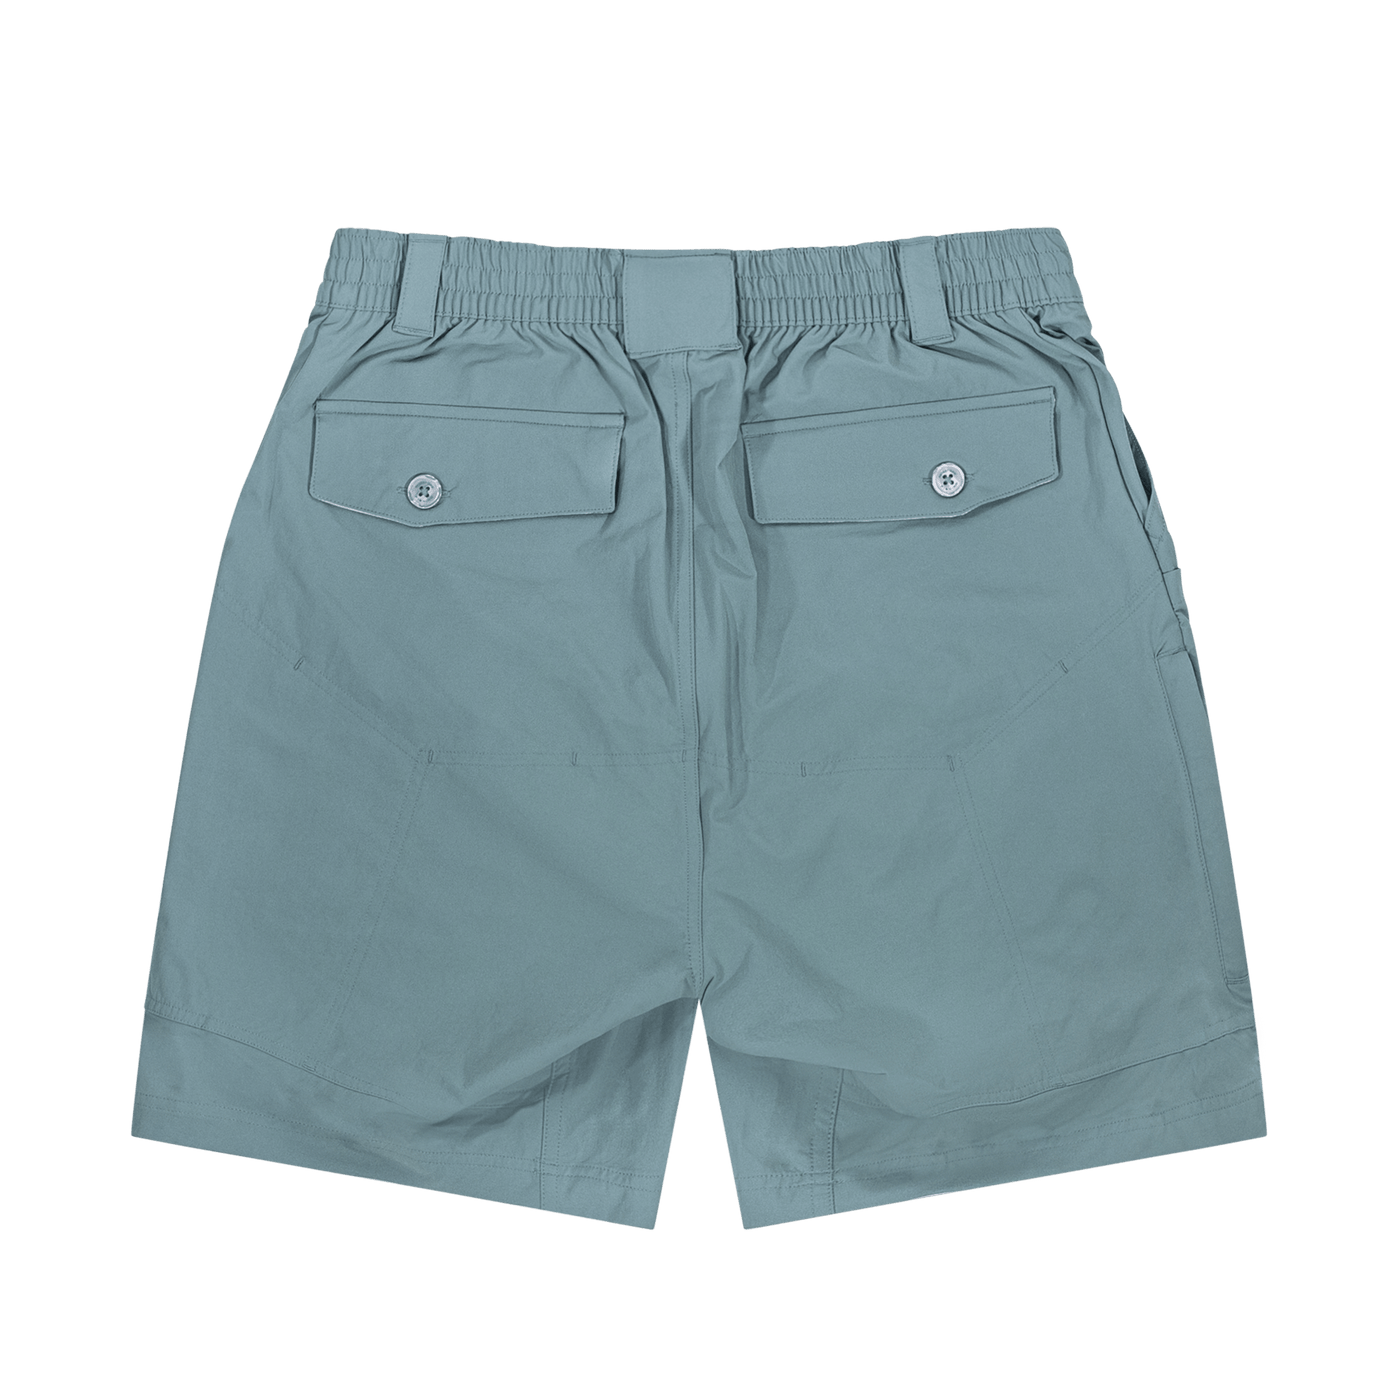 Mossy Oak Men's Fishing Shorts, Swim Trunks, Navy, X-Large : :  Clothing, Shoes & Accessories